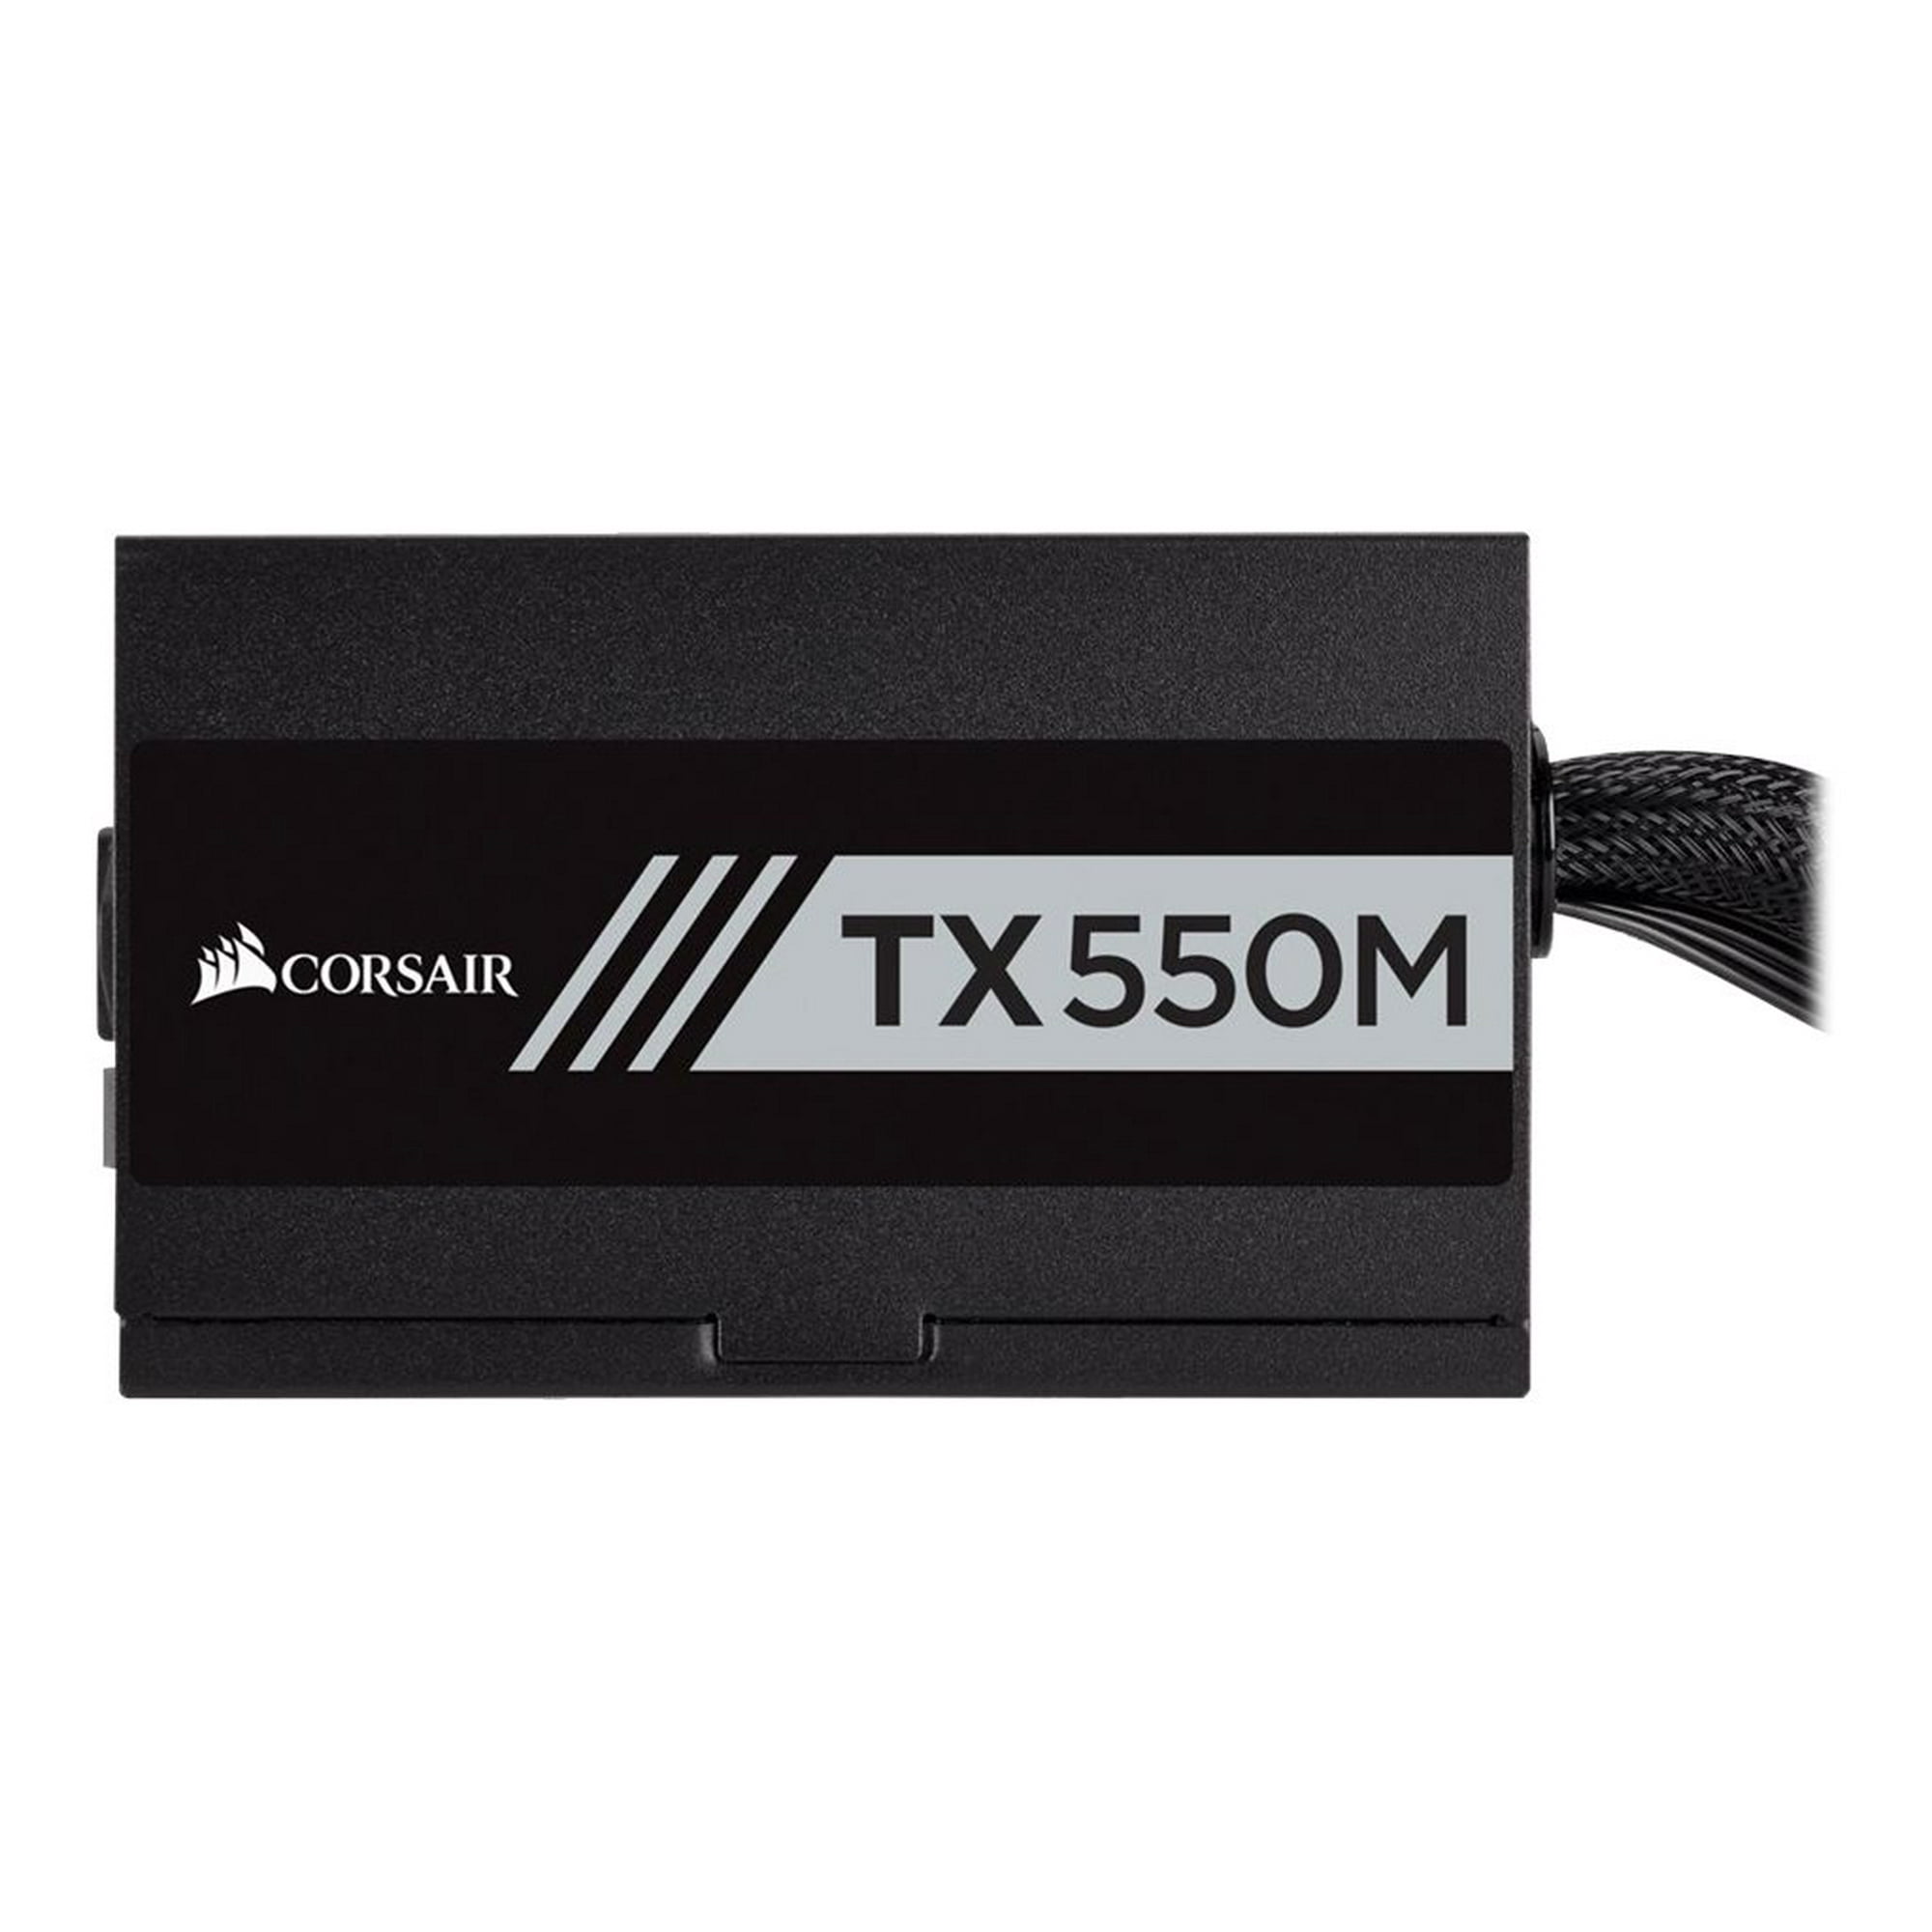 CORSAIR TX550M - Power supply (internal) - ATX12V 2.4/ EPS12V 2.92 - 80 PLUS Gold - AC 100-240 V - 550 Watt - active - North America | Walmart Canada